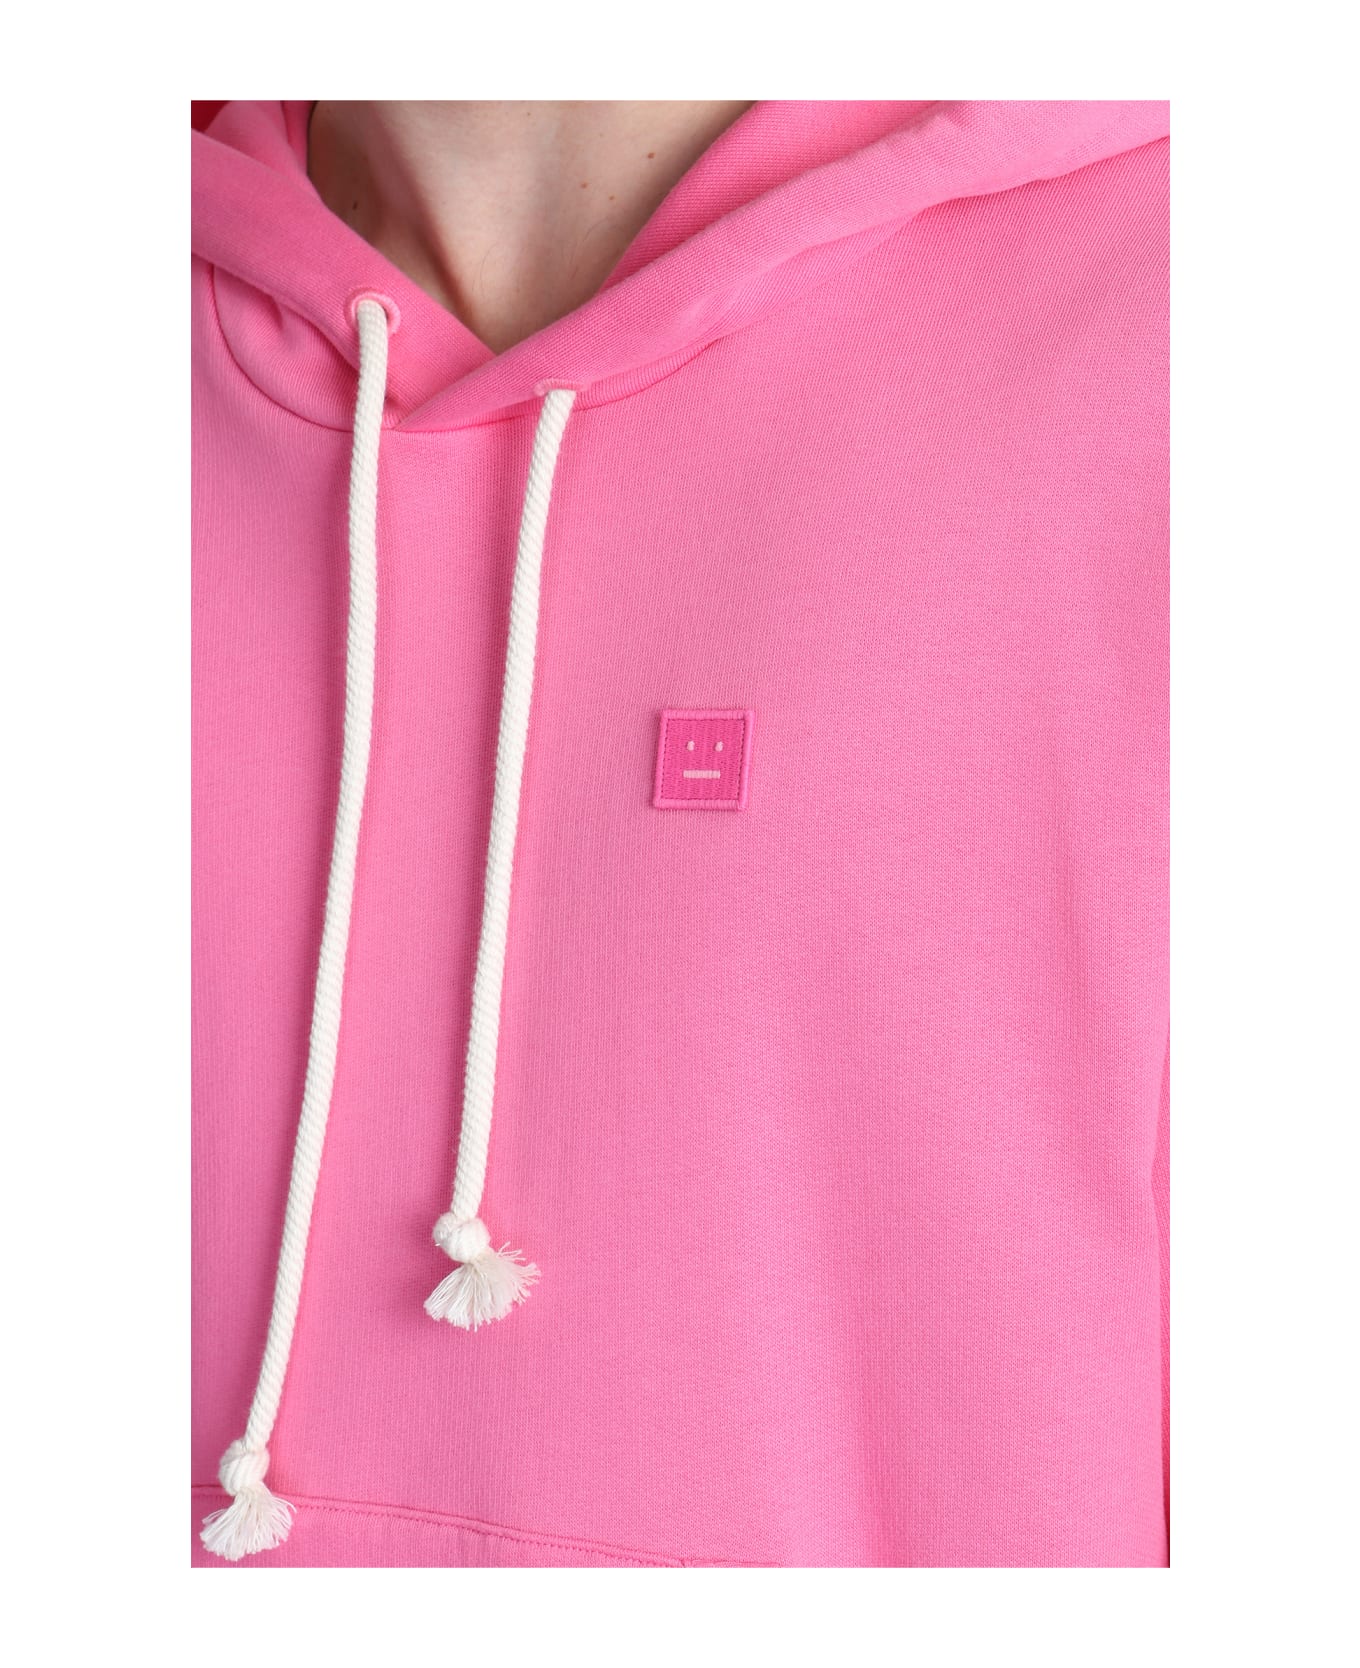 Acne Studios Sweatshirt In Rose-pink Cotton - rose-pink